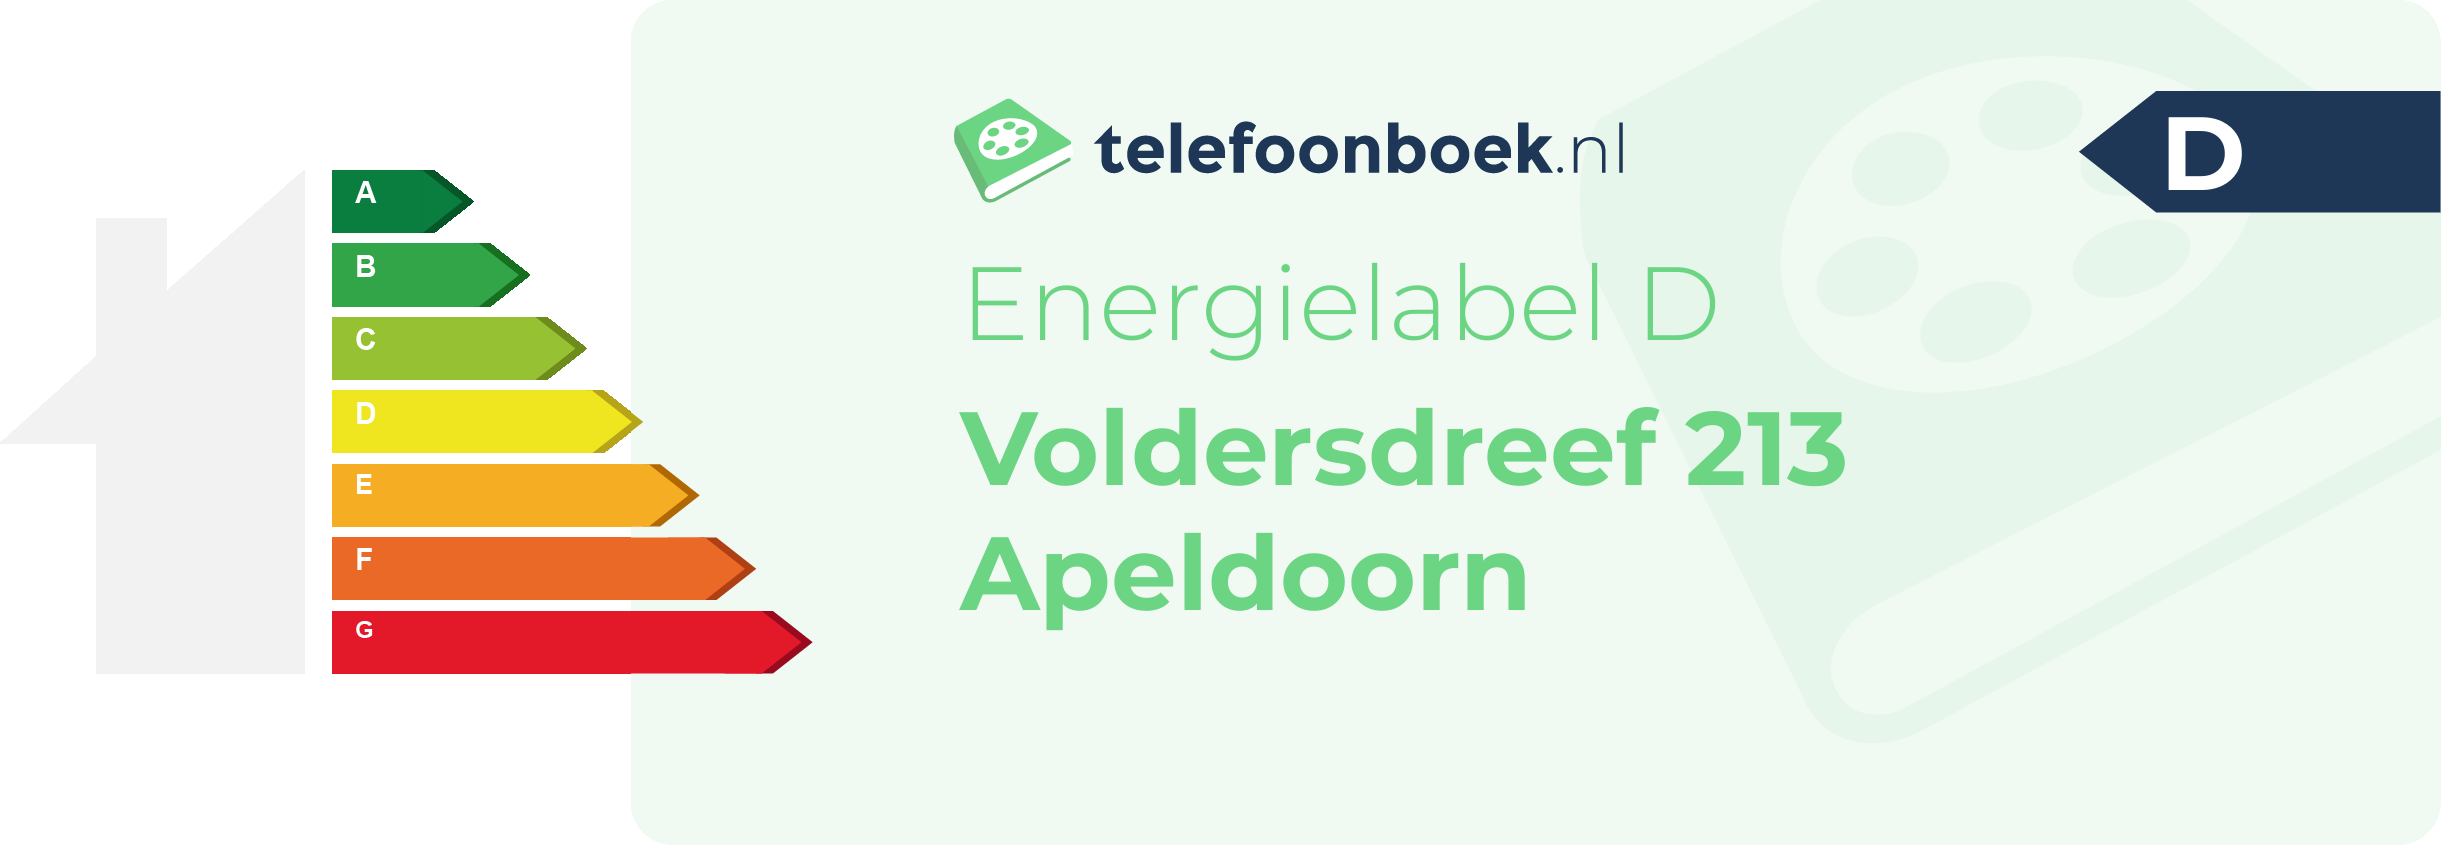 Energielabel Voldersdreef 213 Apeldoorn